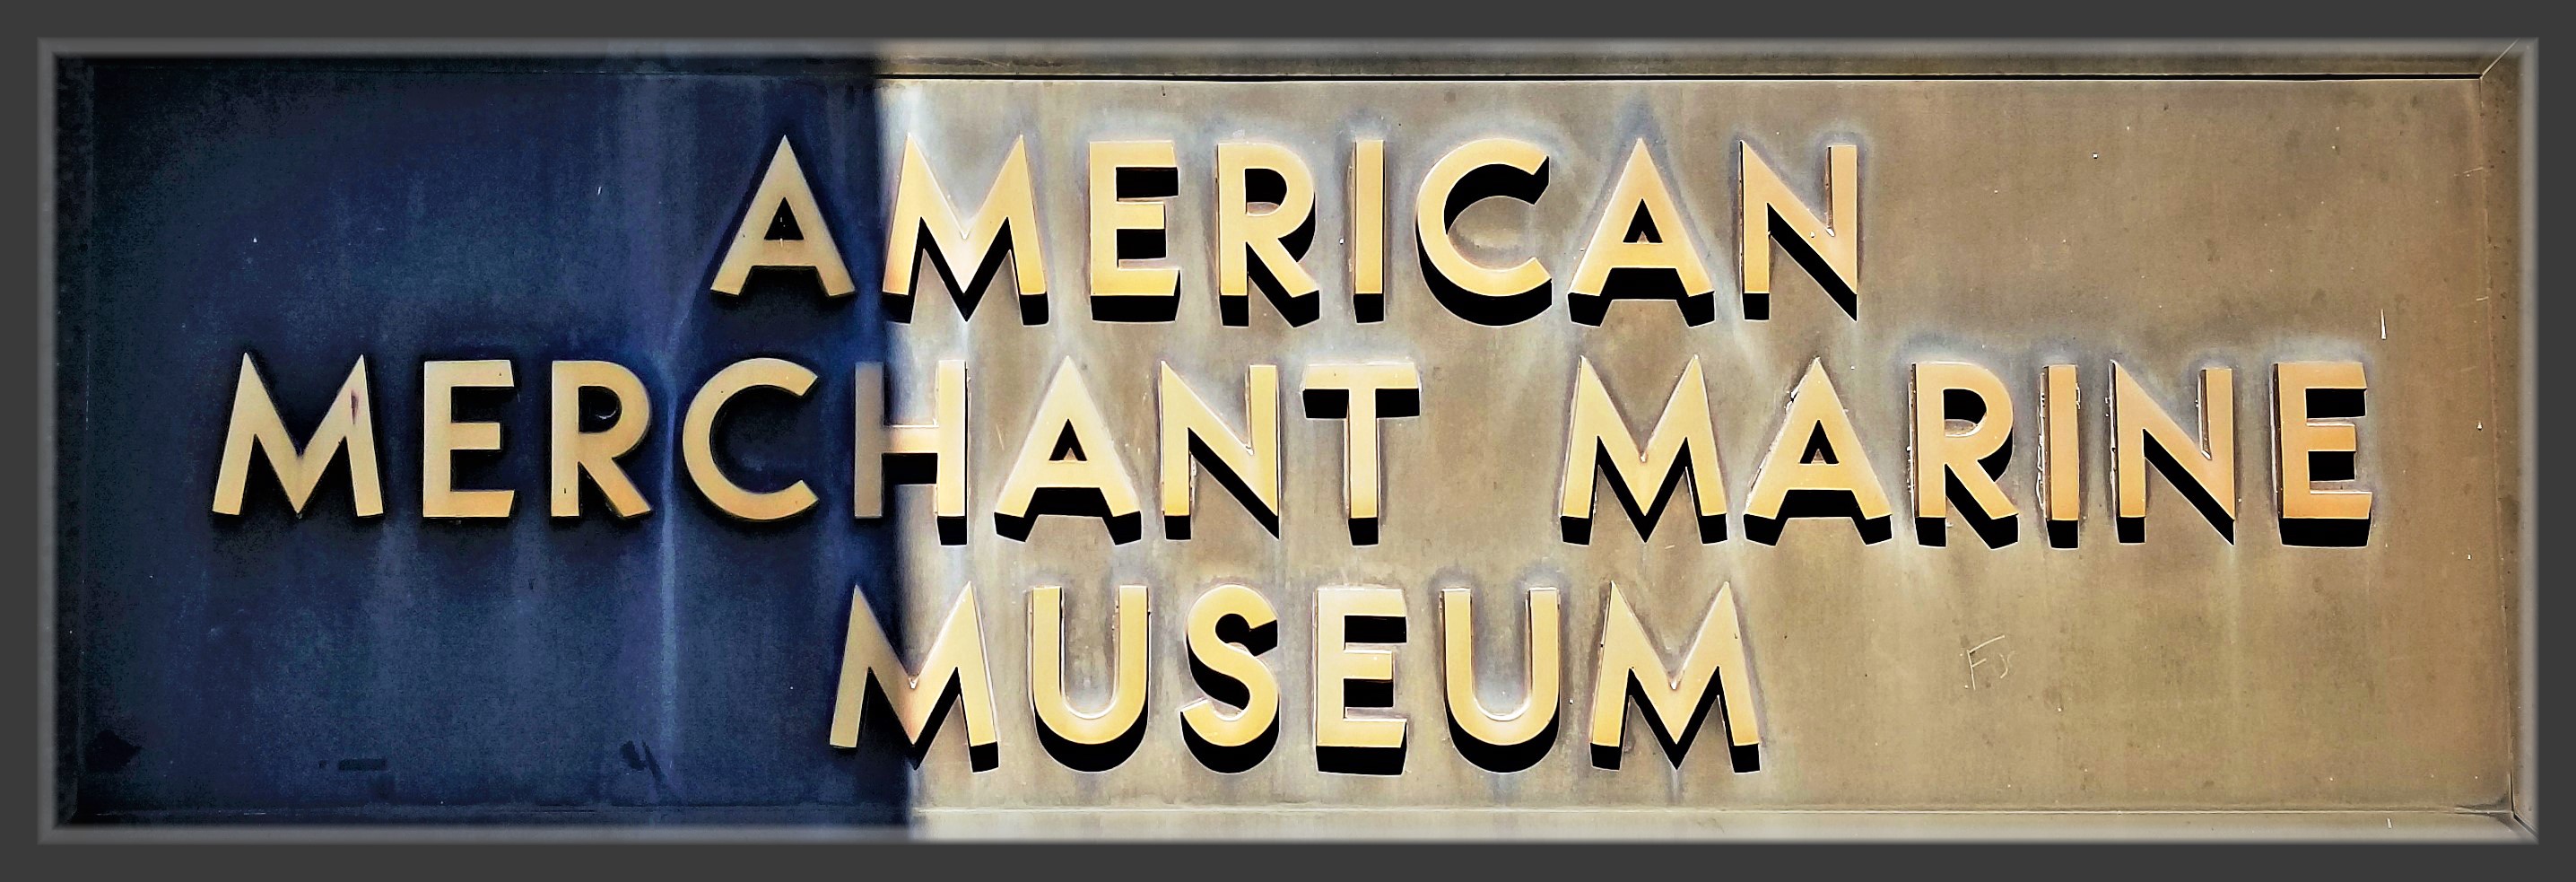 American Merchant Marine Museum